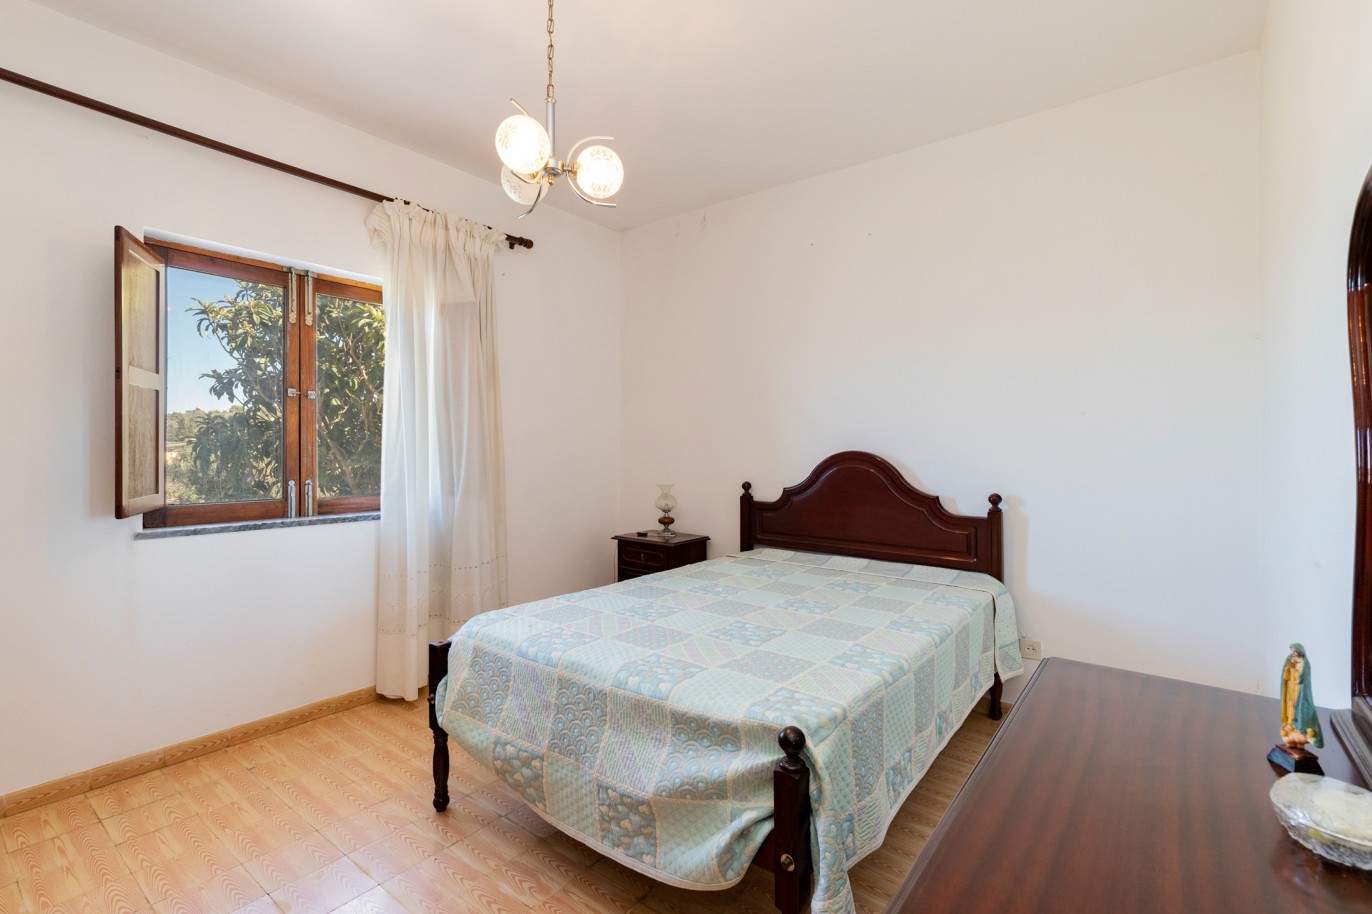 Property to remodel, for sale in Falfeira, Lagos, Algarve_210373